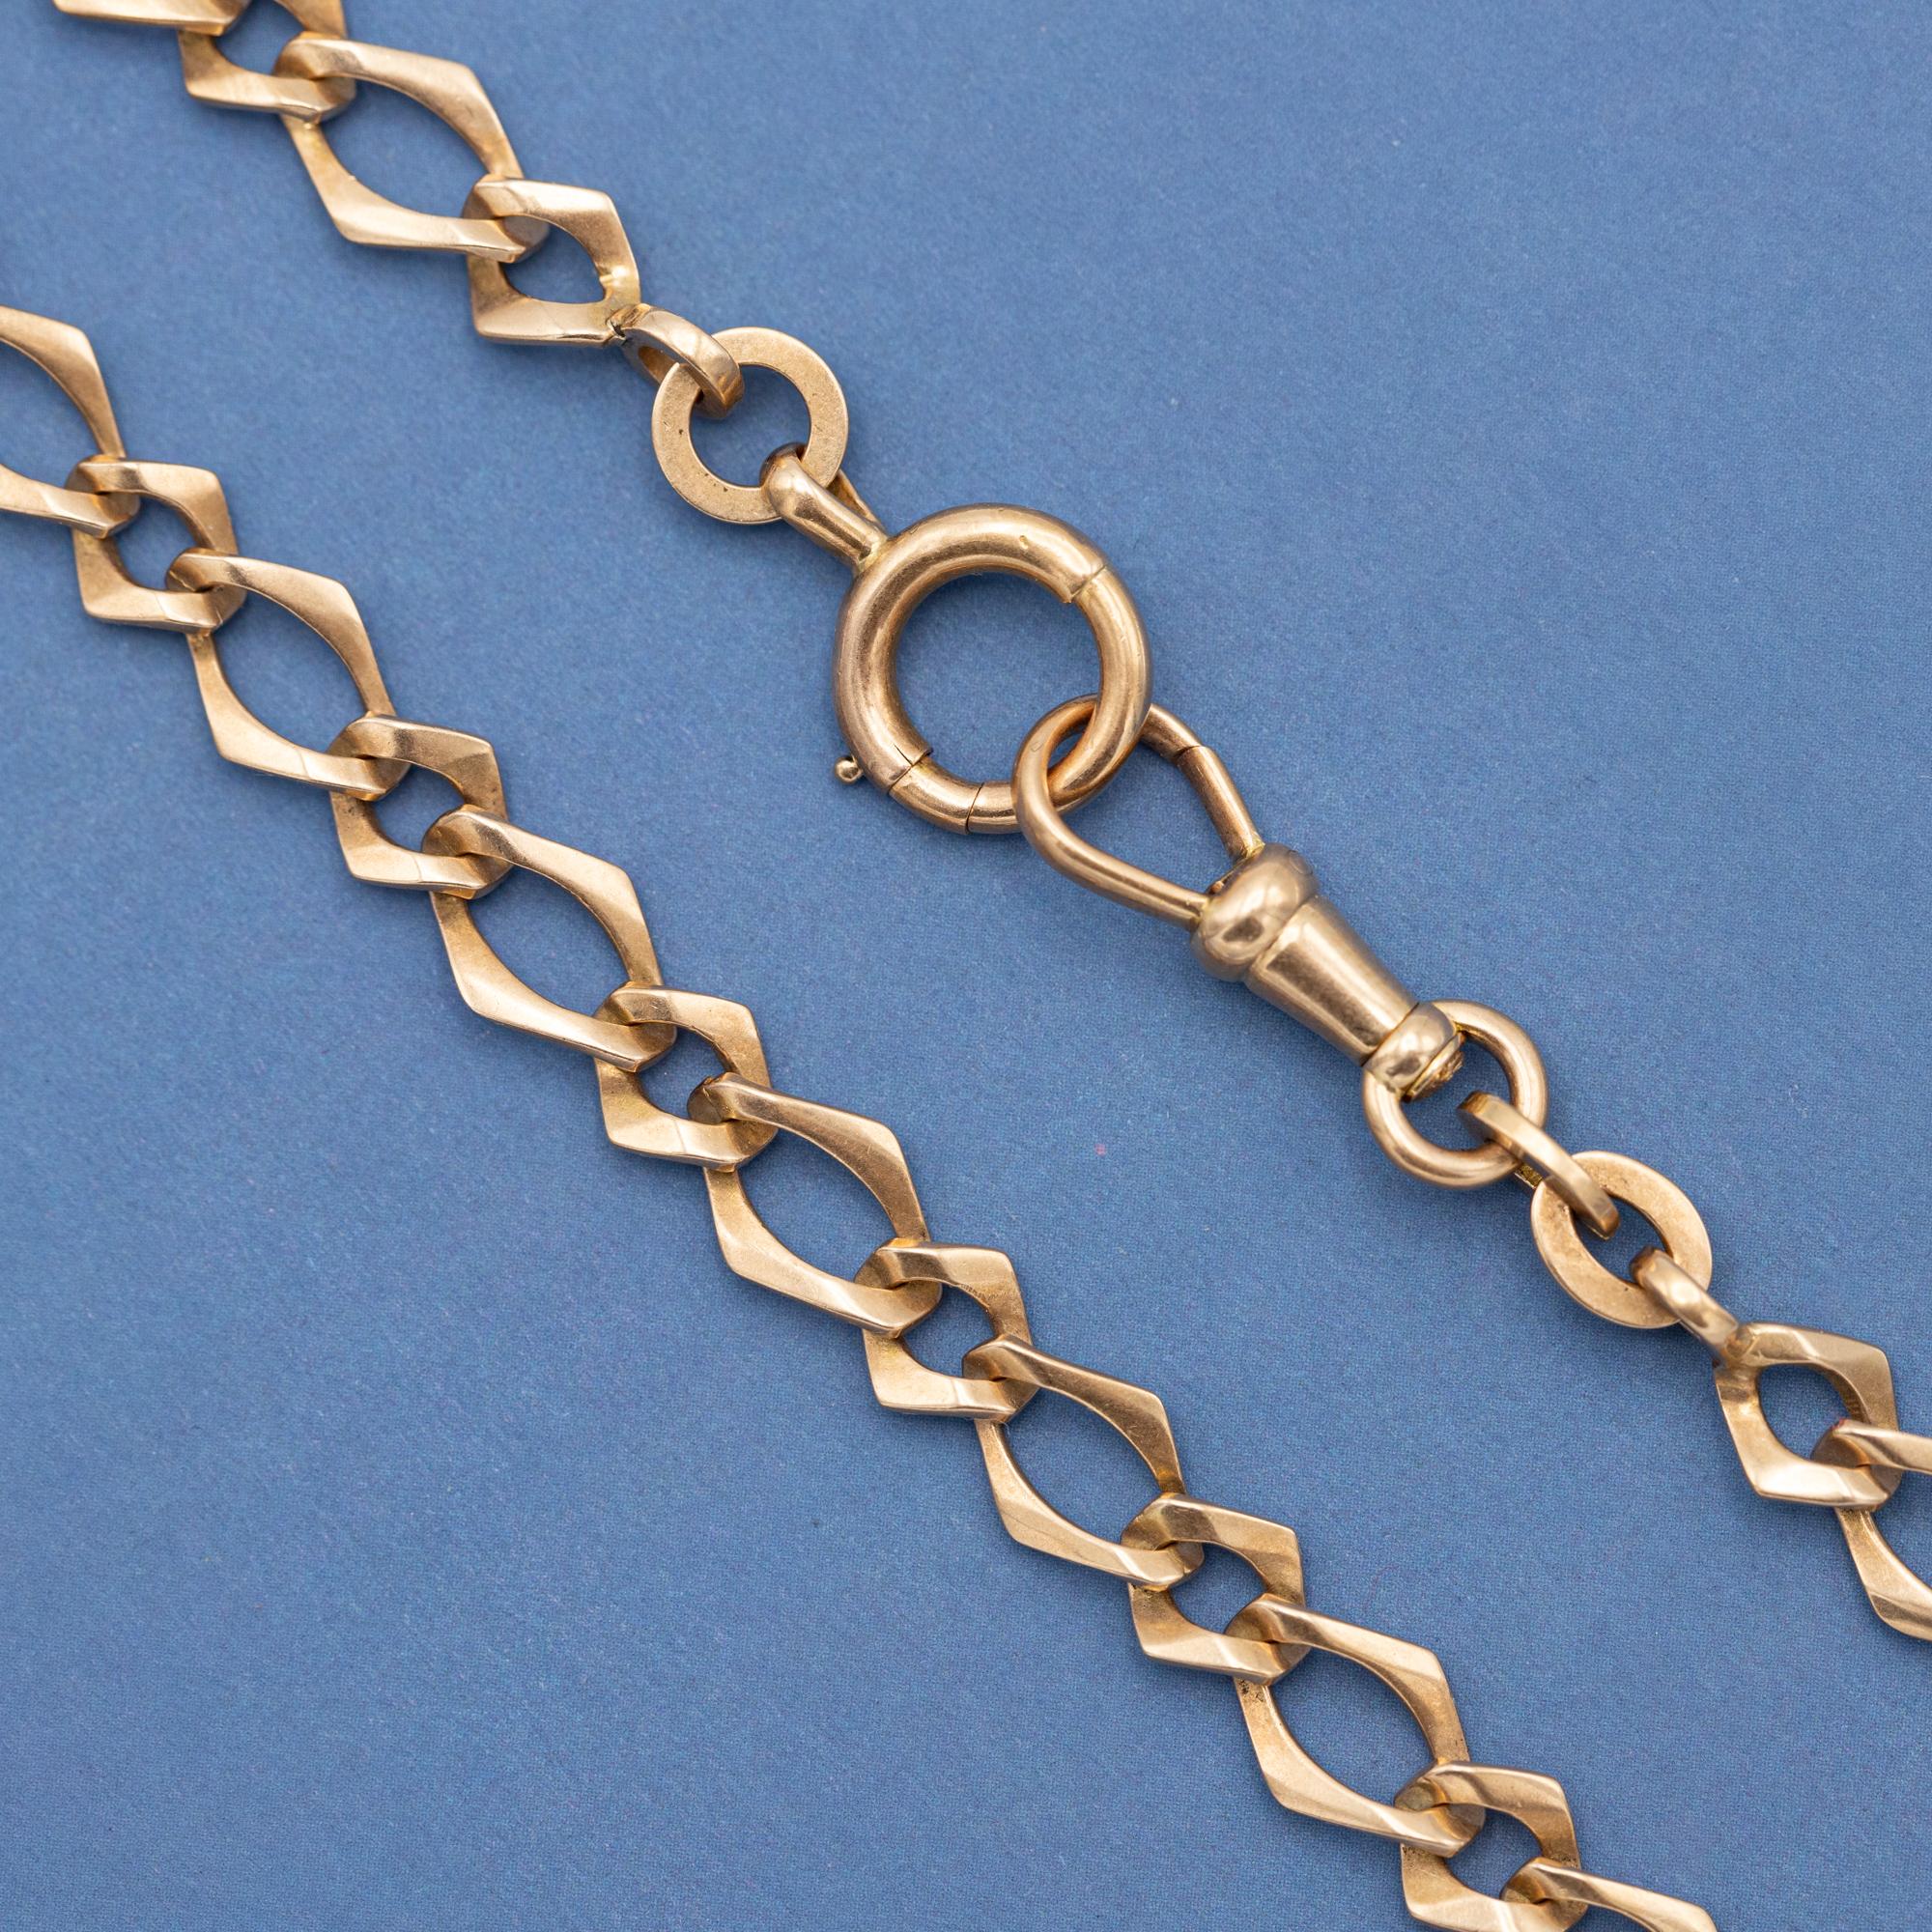 18K solid gold Pocket watch chain - Antique Necklace - Decorative Choker Sautoir 1